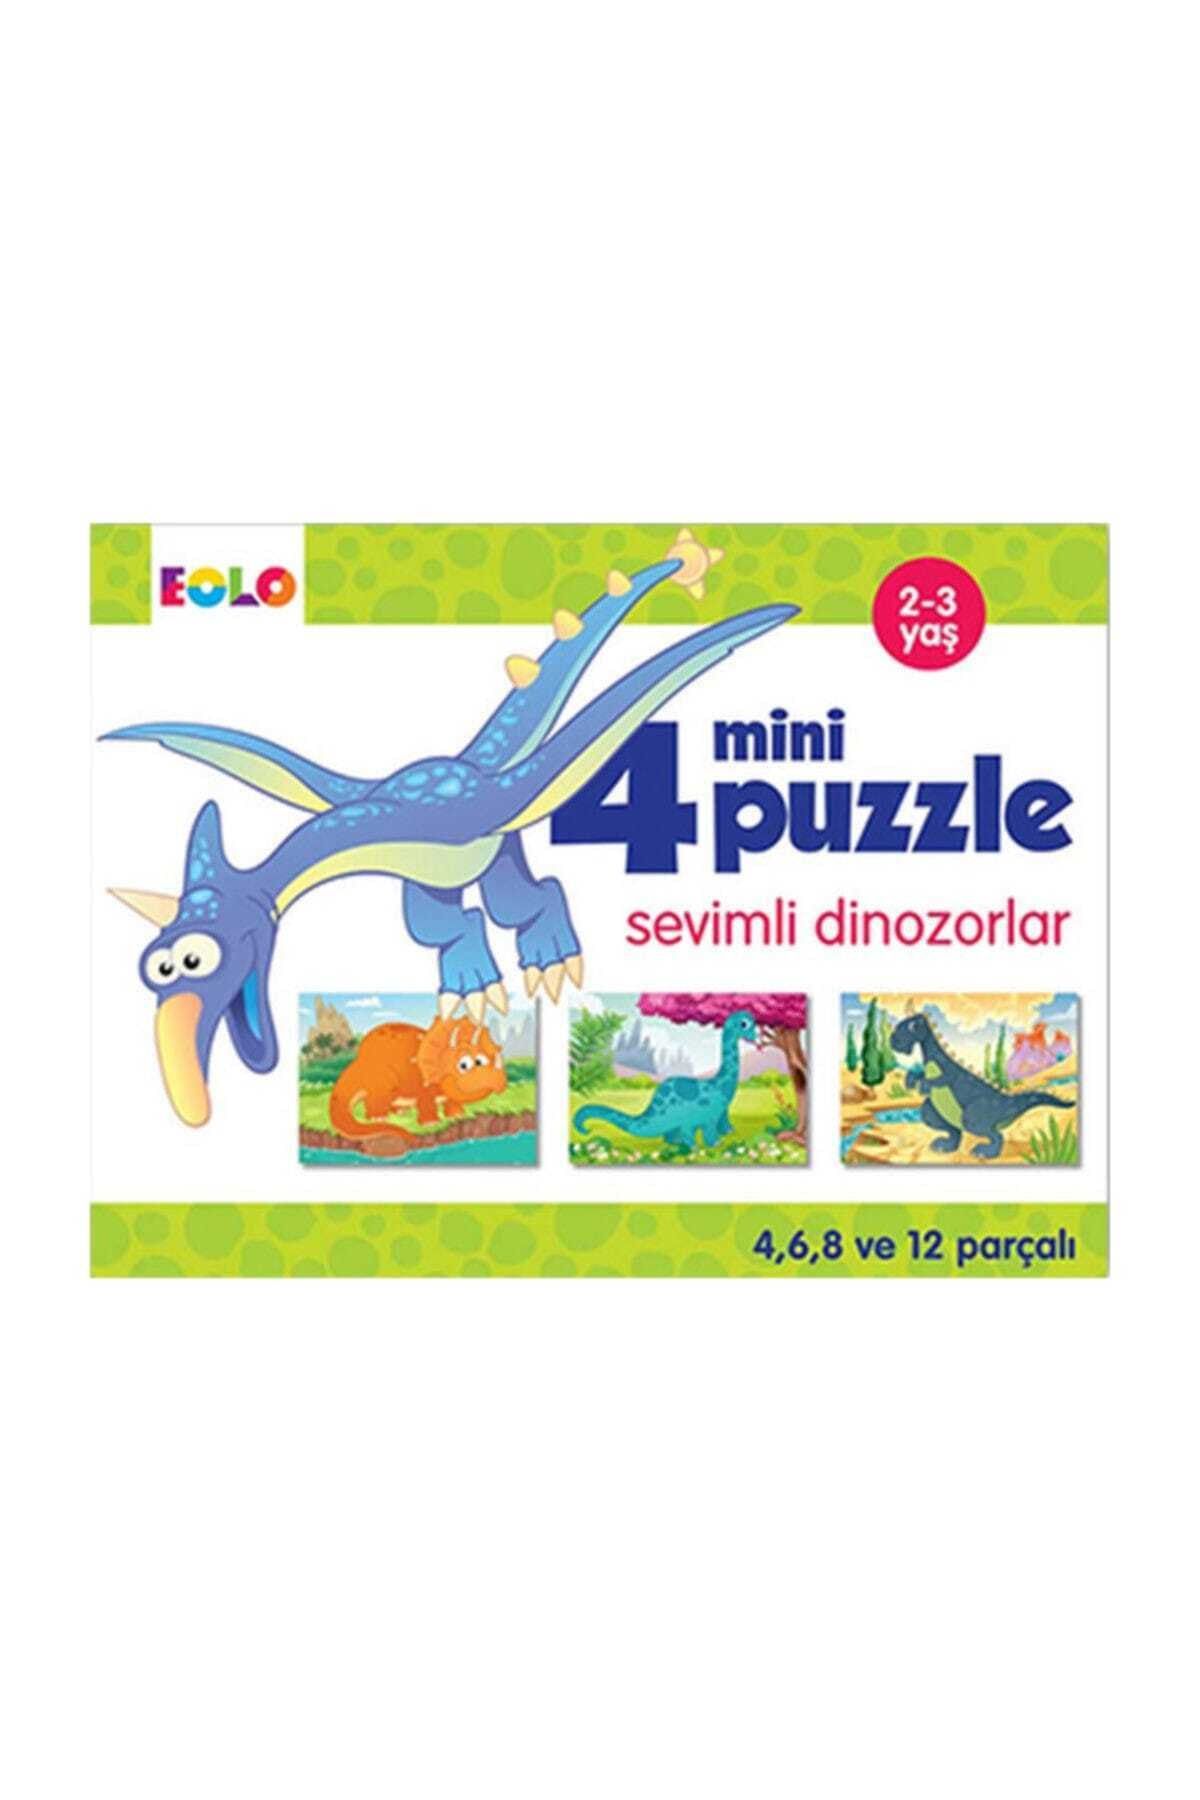 Eolo Sevimli Dinozorlar - 4 Mini Puzzle - Null